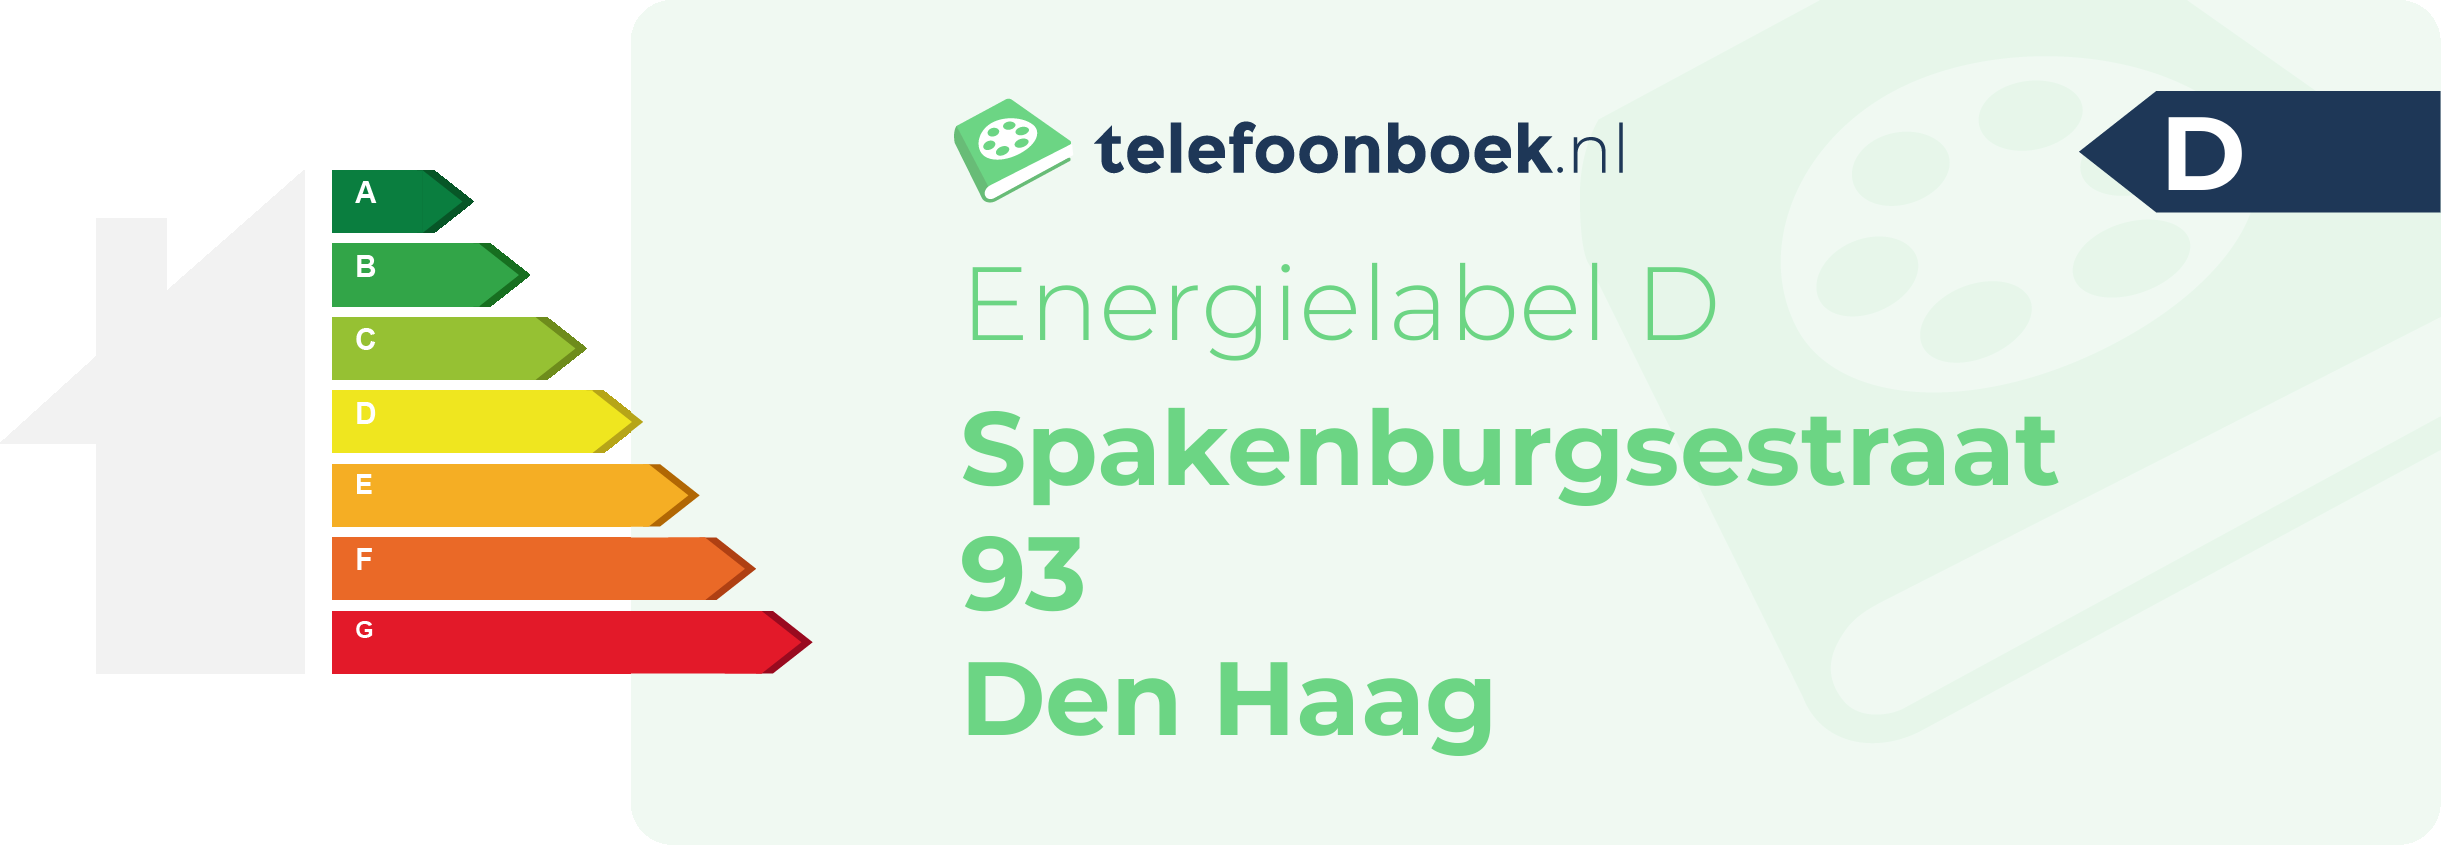 Energielabel Spakenburgsestraat 93 Den Haag